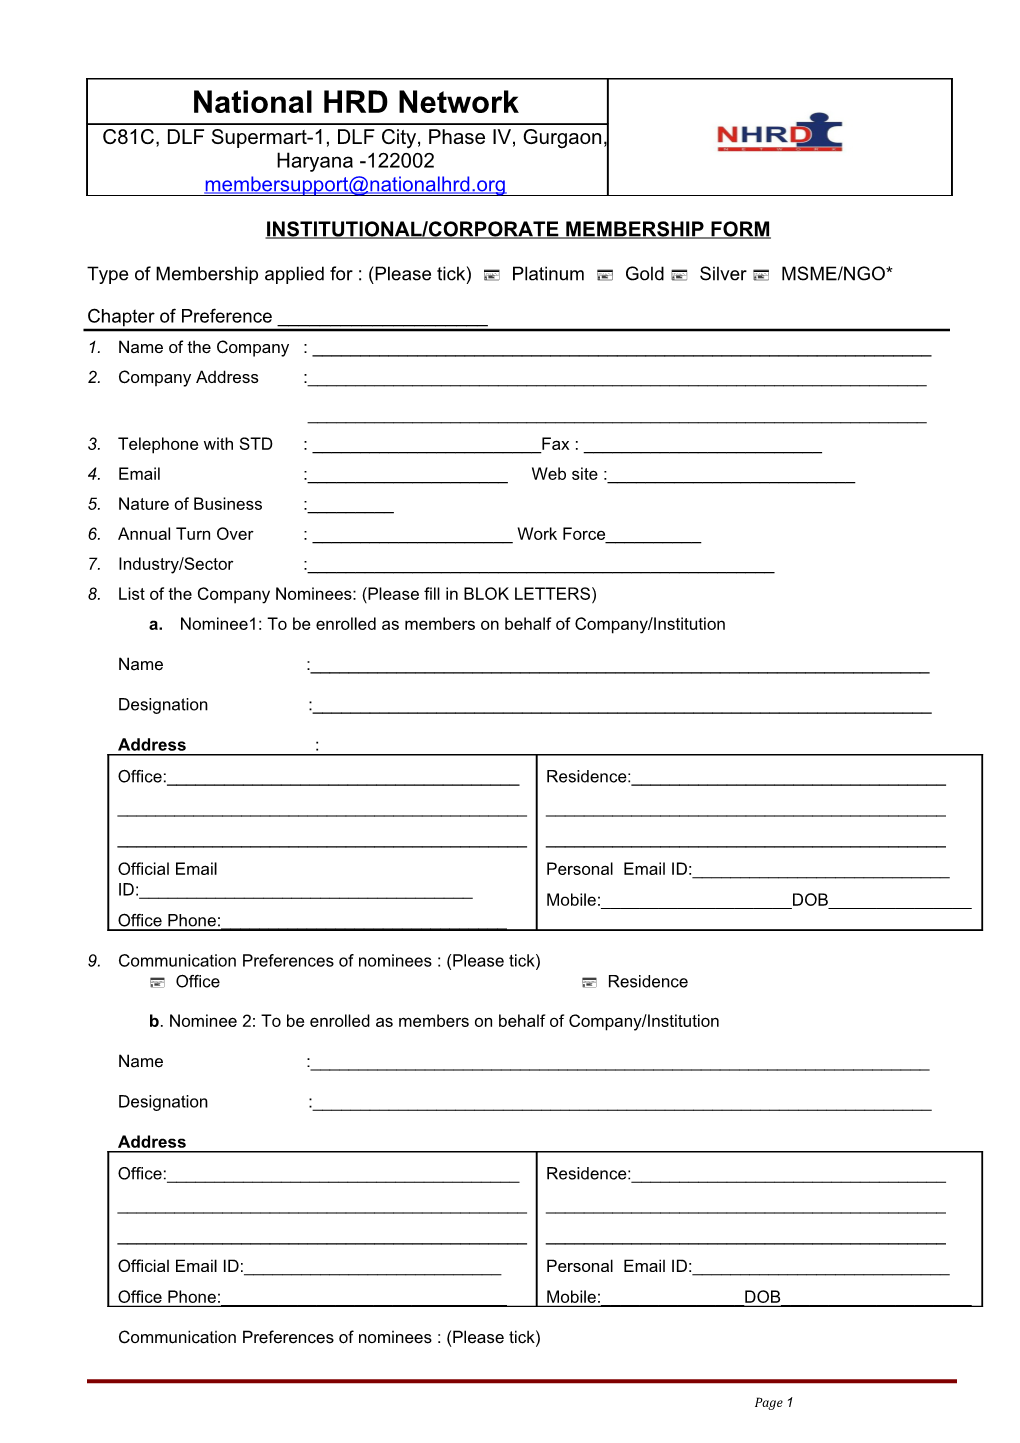 Institutional/Corporate Membership Form